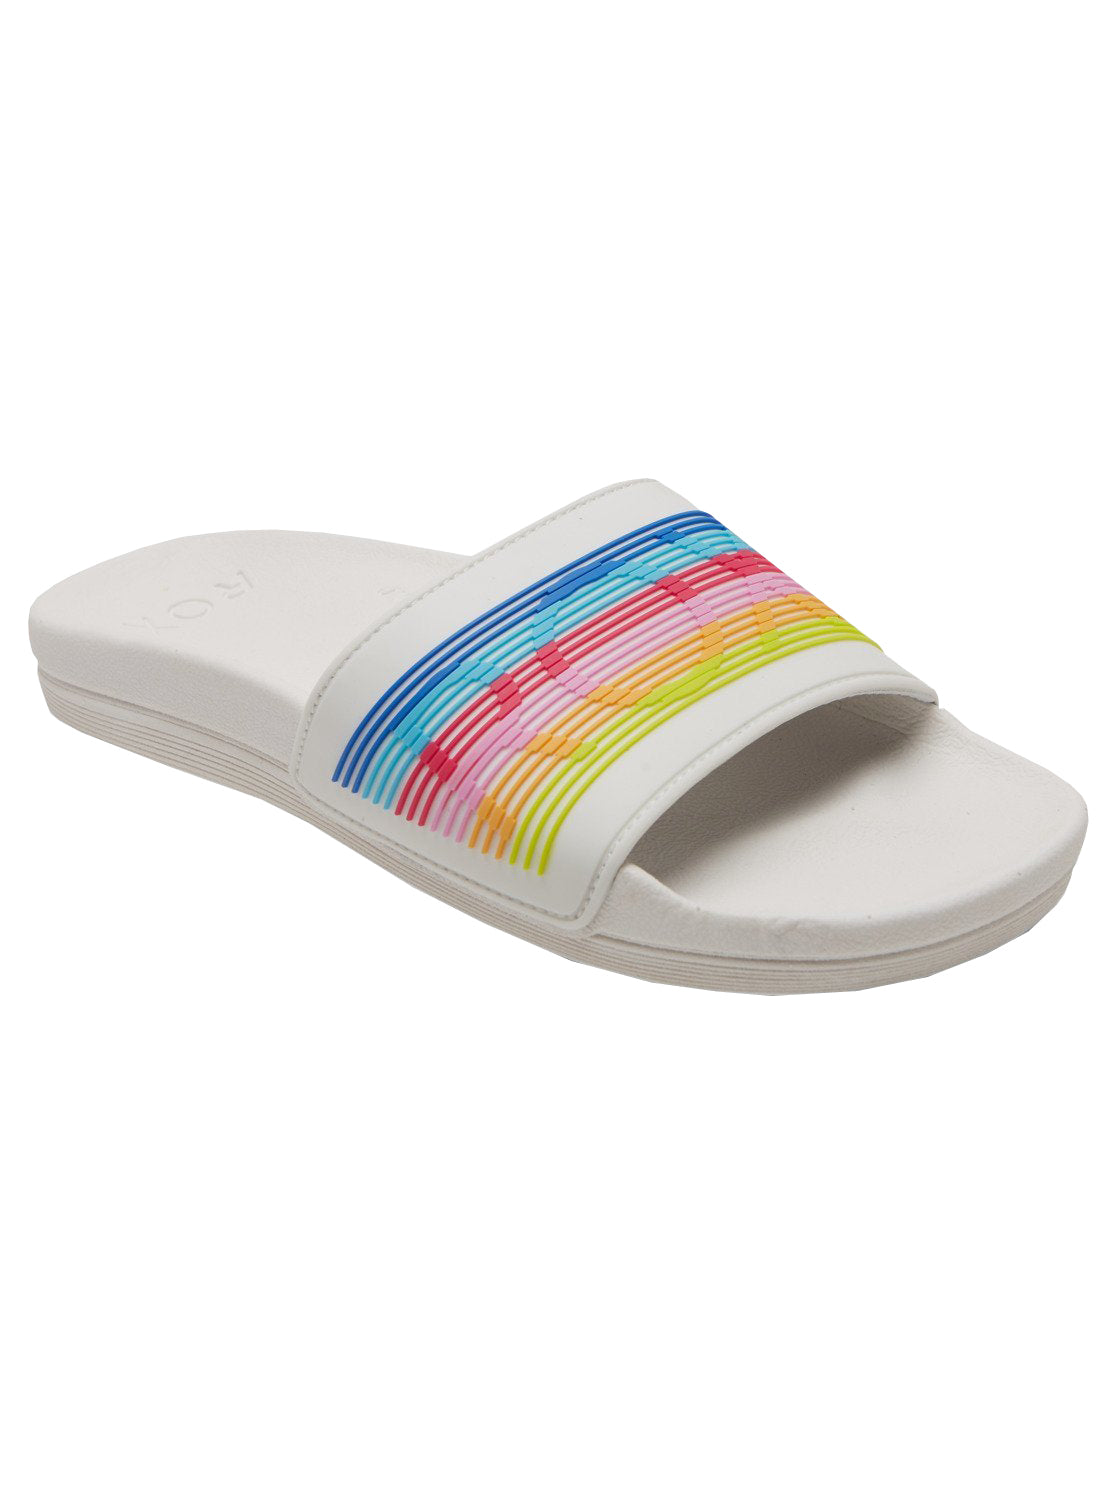 Roxy Slippy LX Womens Sandal TRW-White-Rainbow 6